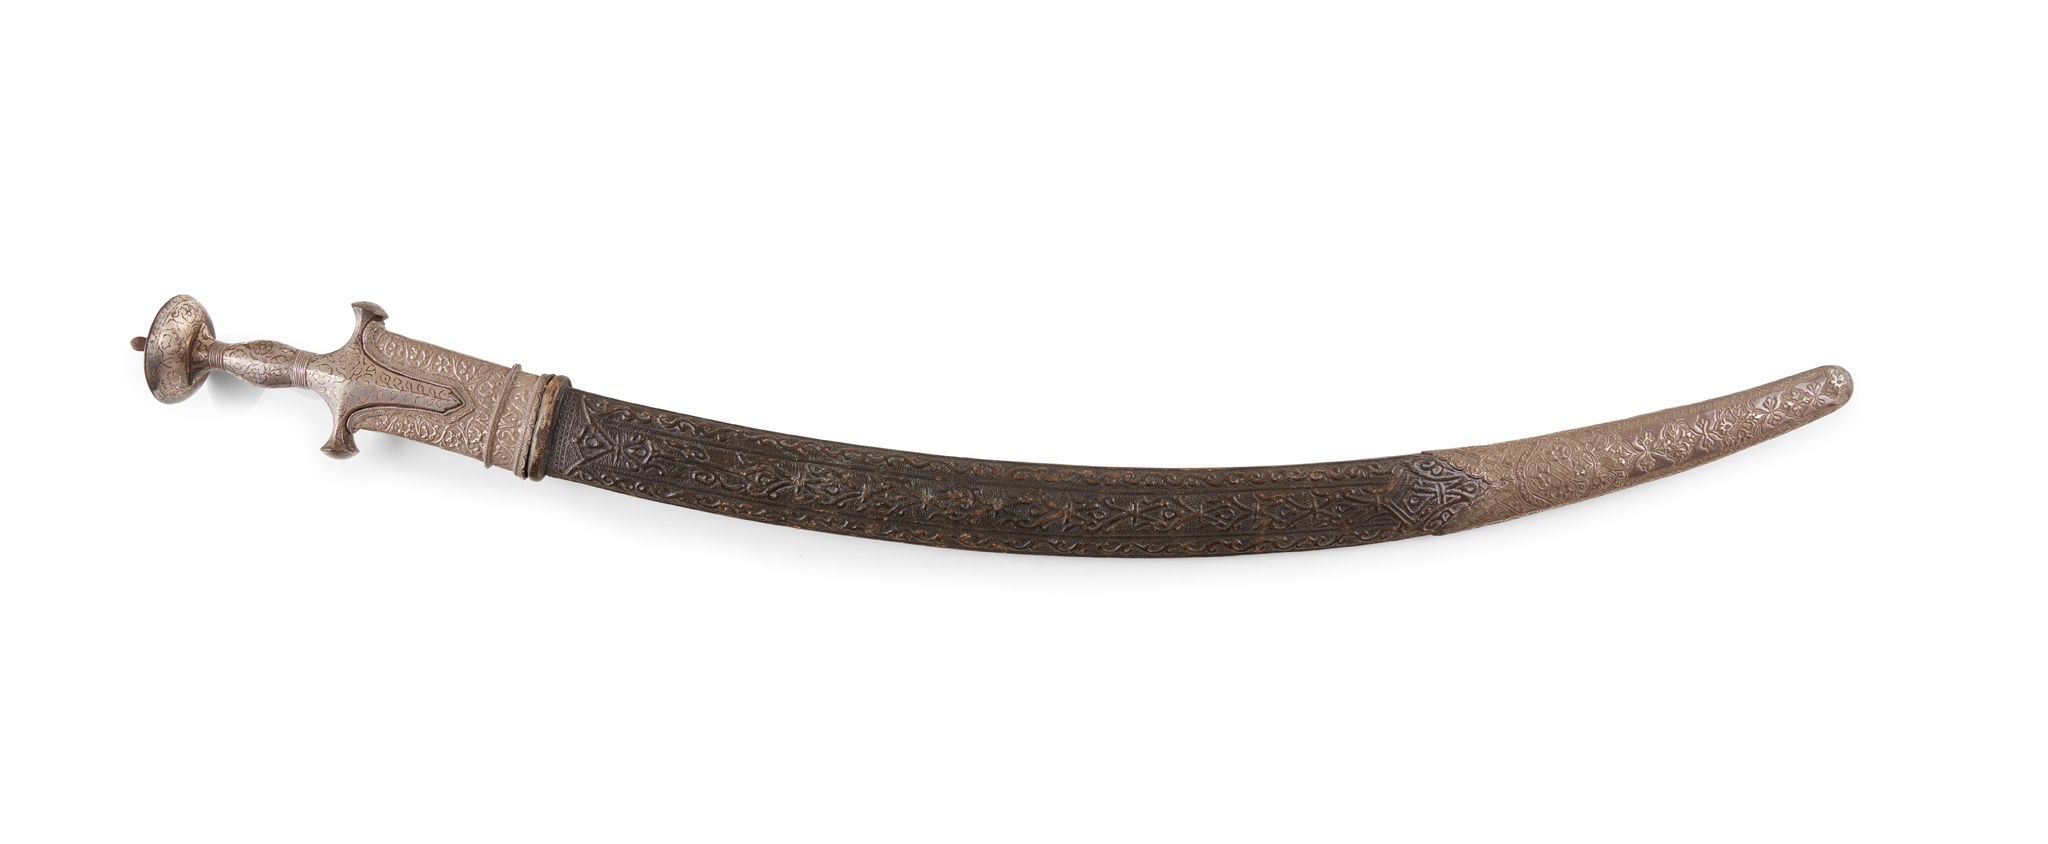 LOT 124 | INDIAN SILVER-INLAID STEEL TULWAR SWORD 19TH CENTURY | 90cm long | £1,000 - £1,500 + fees